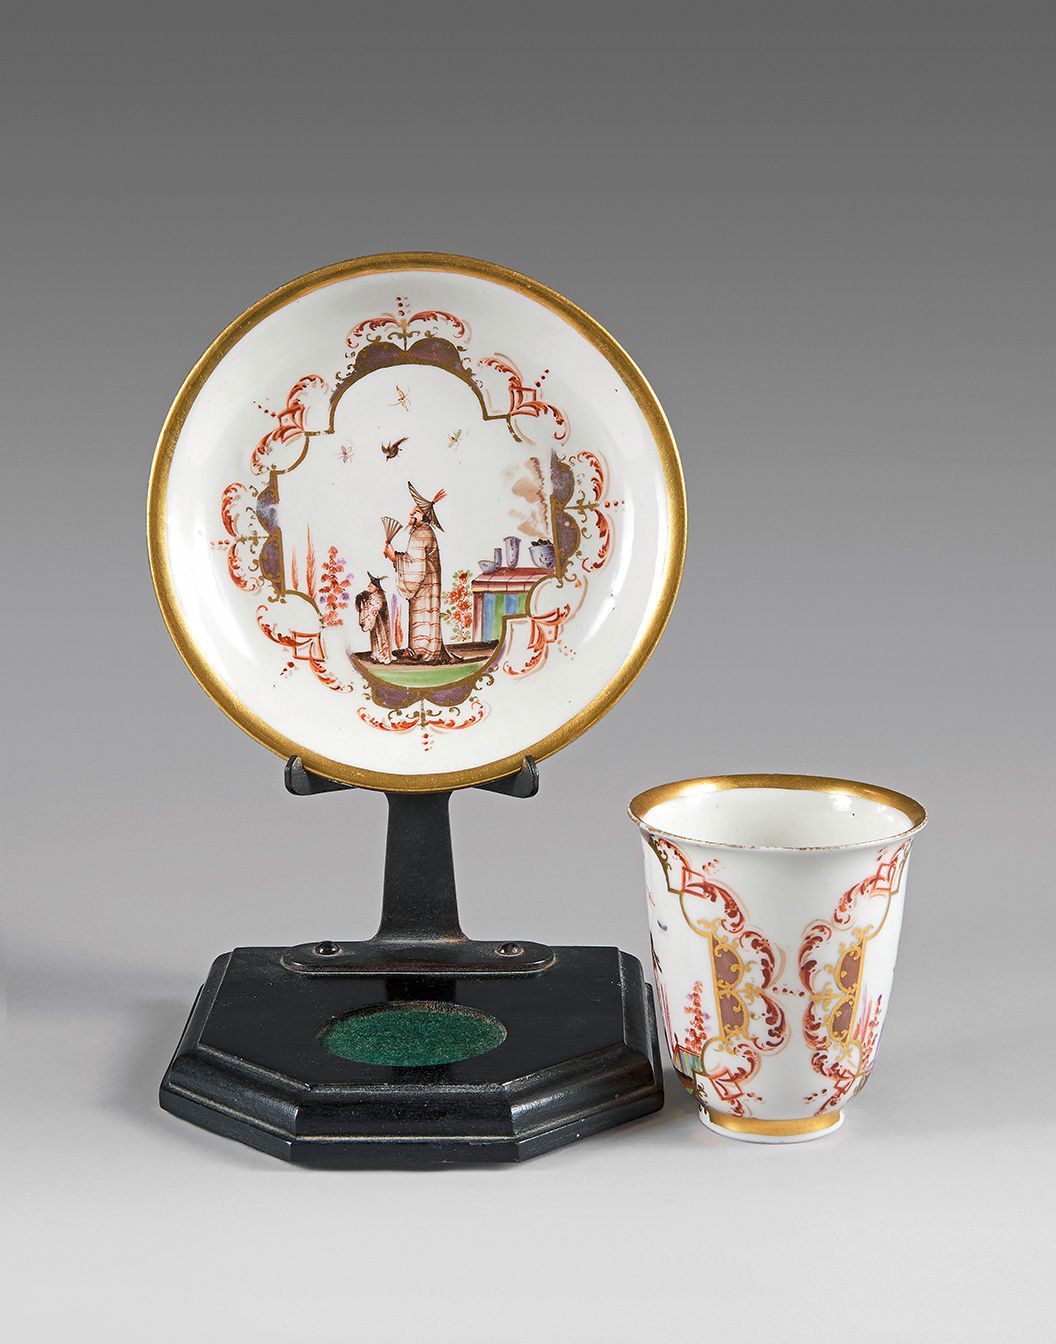 MEISSEN 瓷杯和碟子，有多色和金色的中国人装饰，周围有叶子。
约1725-1730年。
高度：7.5厘米
直径：14厘米